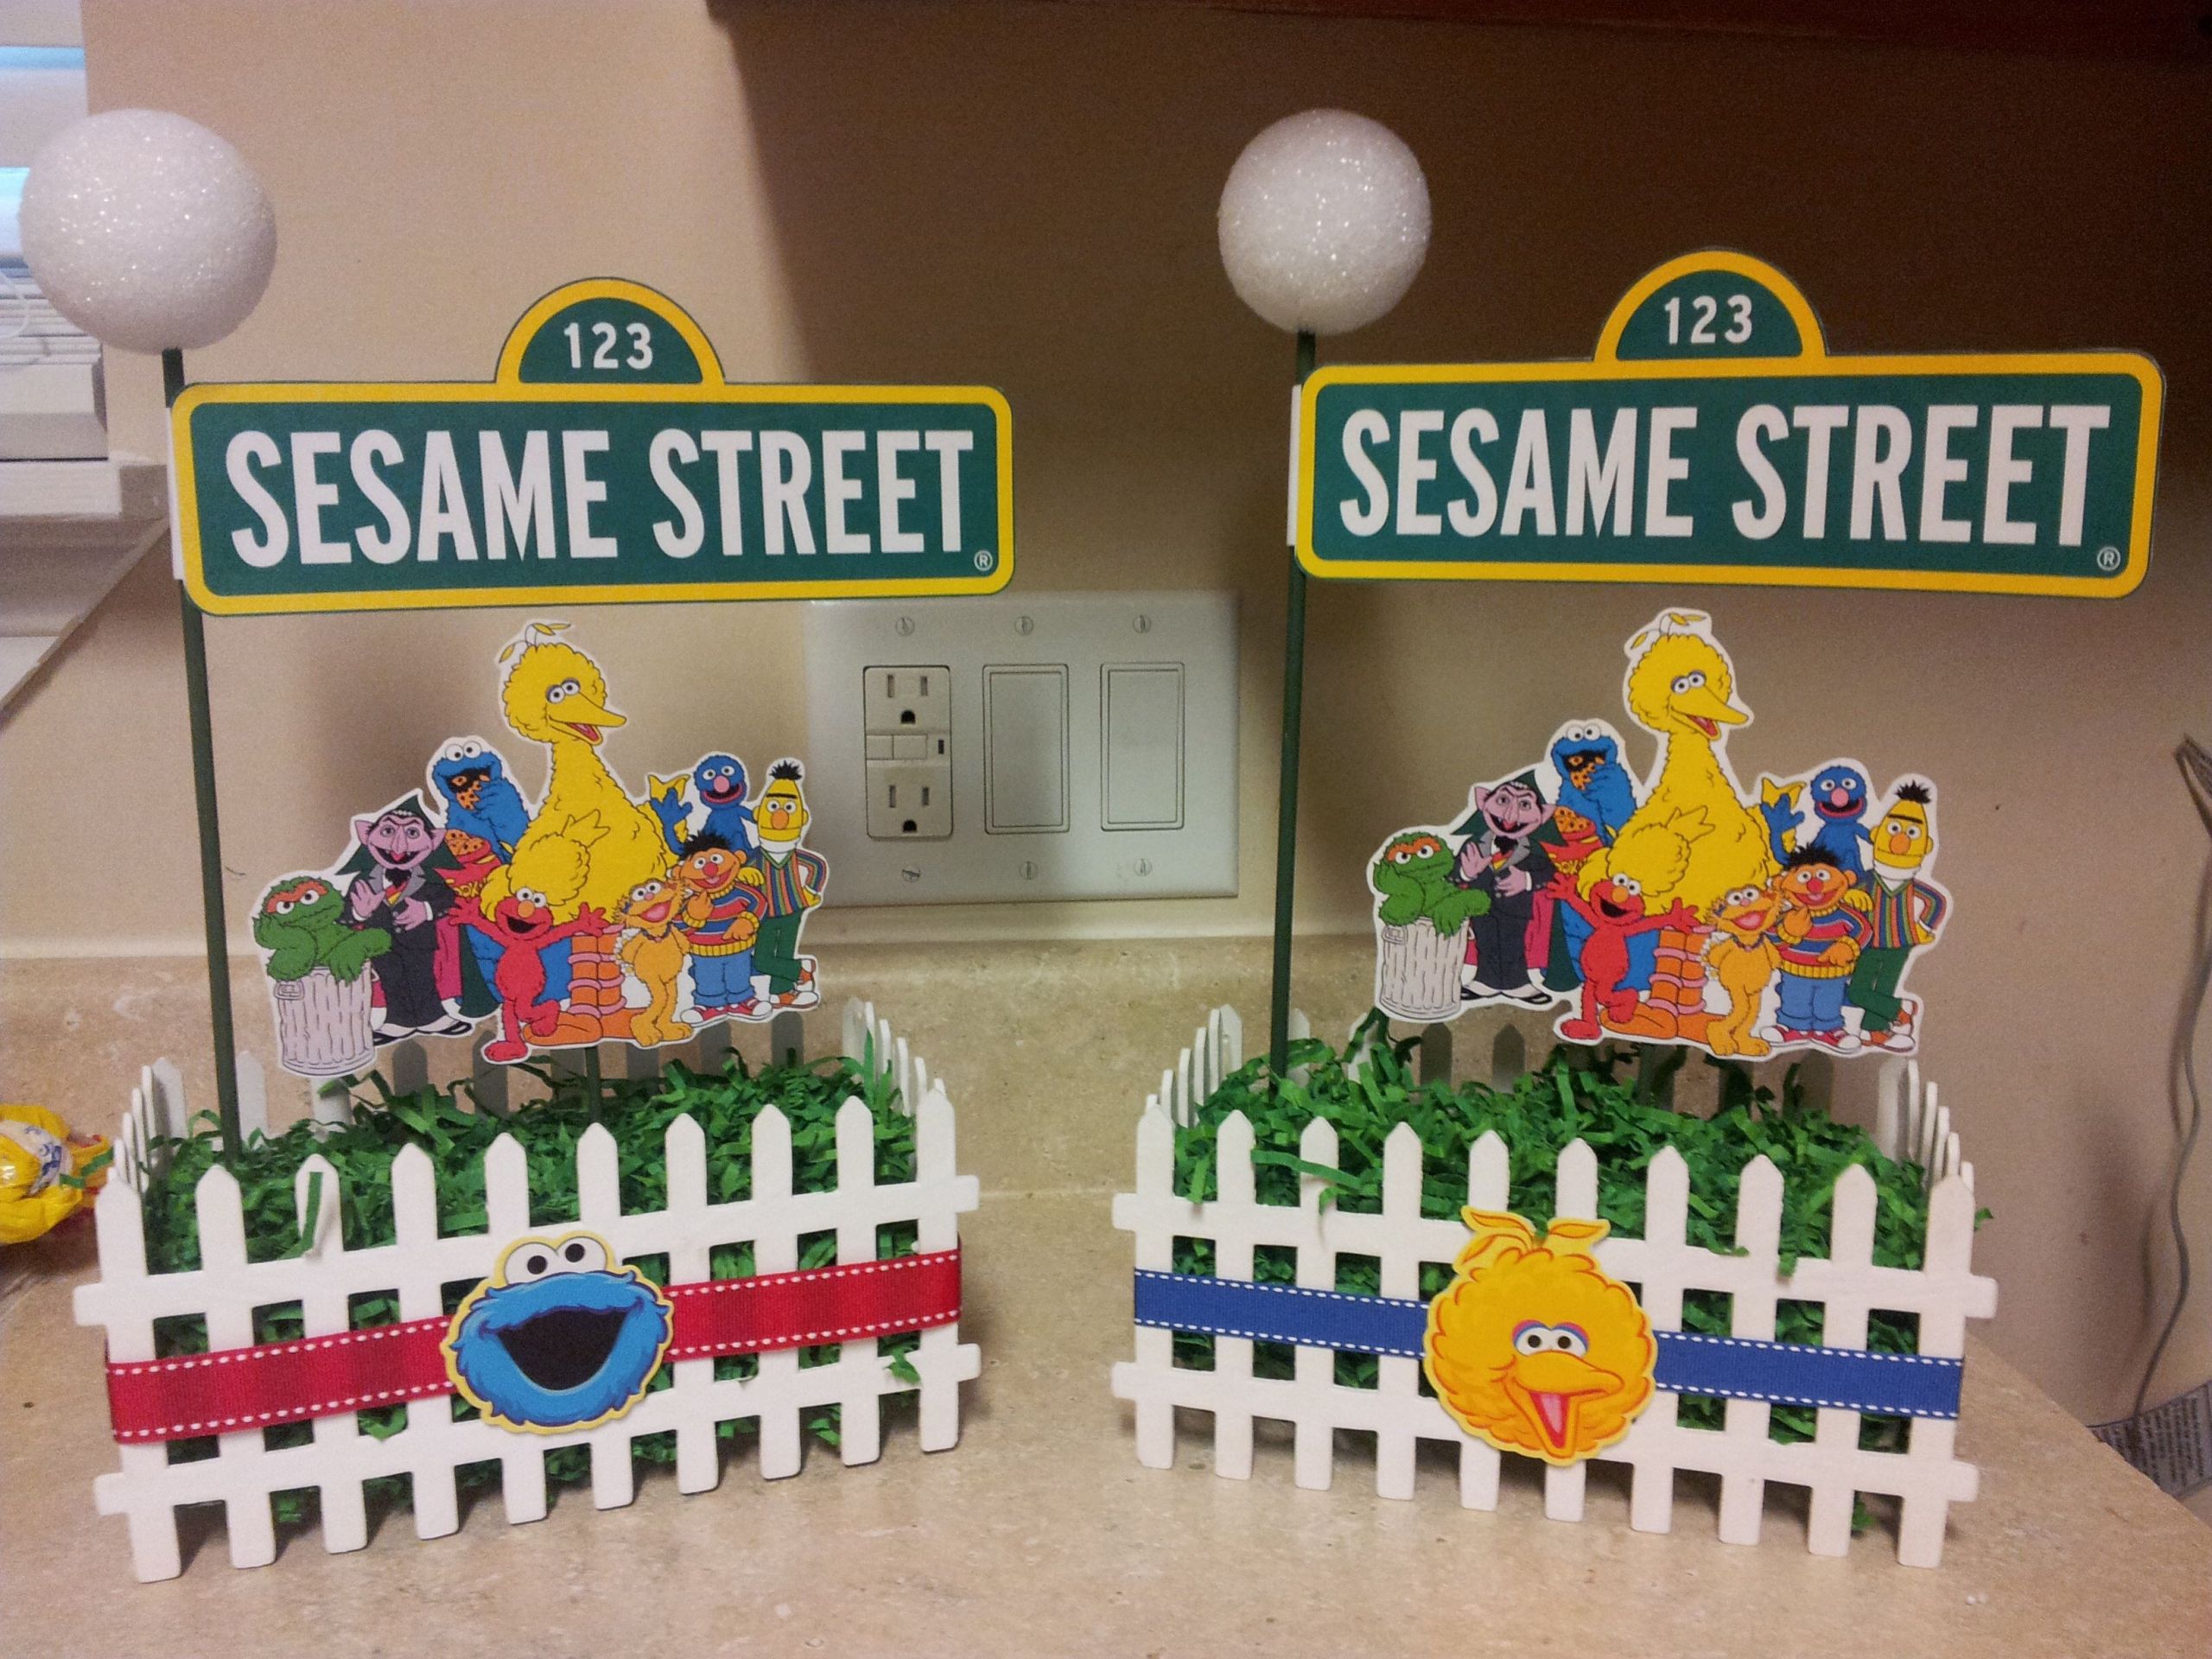 Sesame Street Centerpieces Birthday Party
 Sesame Street centerpieces